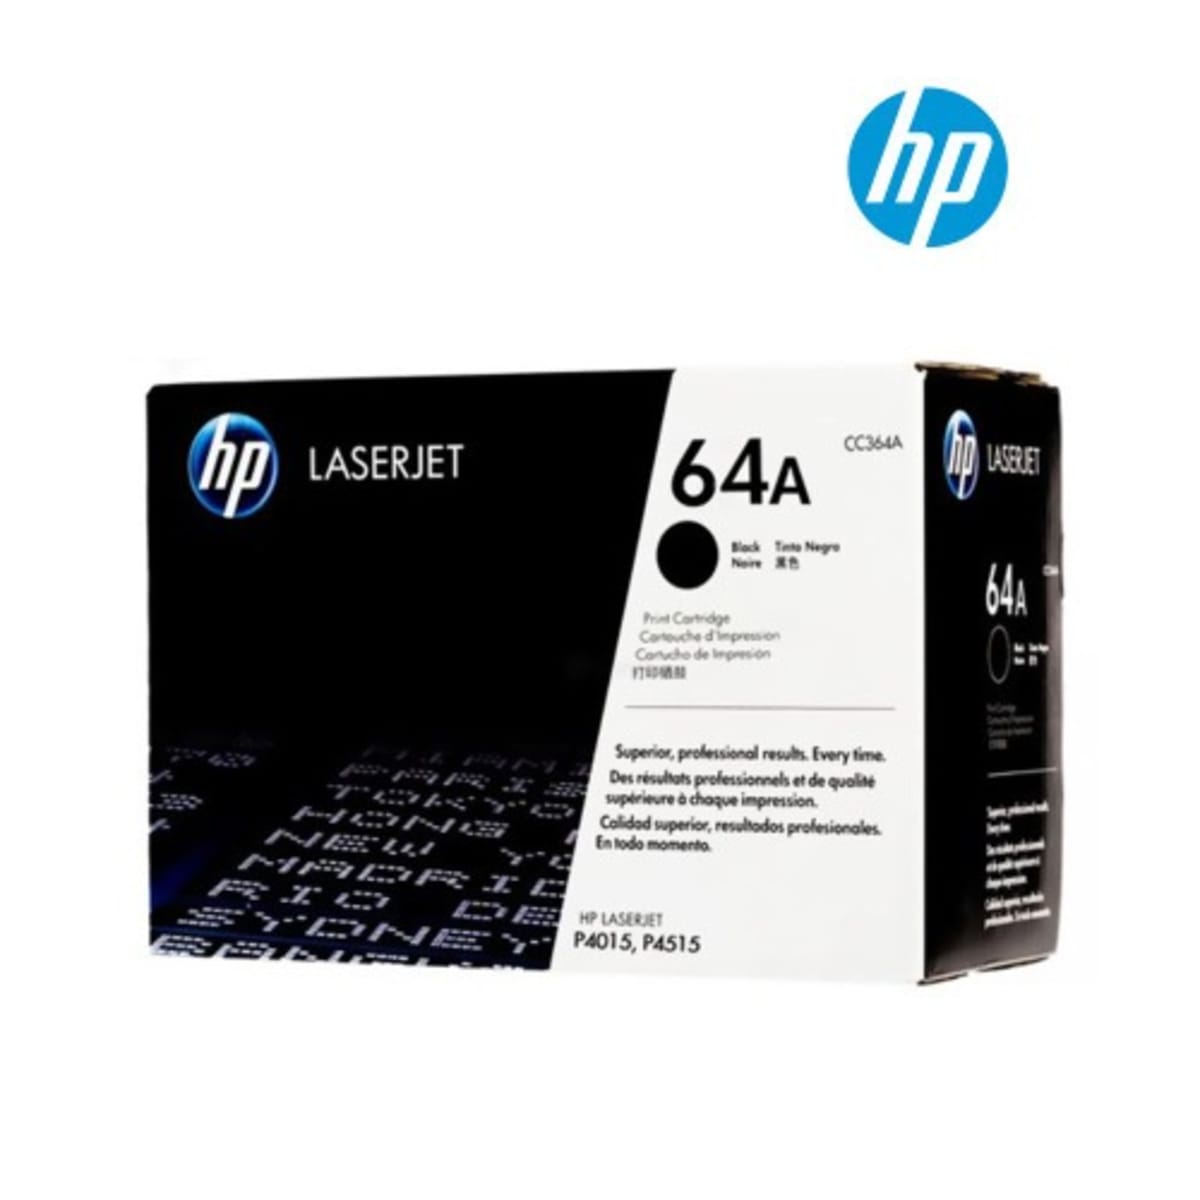 HP 64a Cc364a Laserjet Toner Cartridge For Hp Laserjet P4014, P4014dn, P4014 | Konga Online Shopping